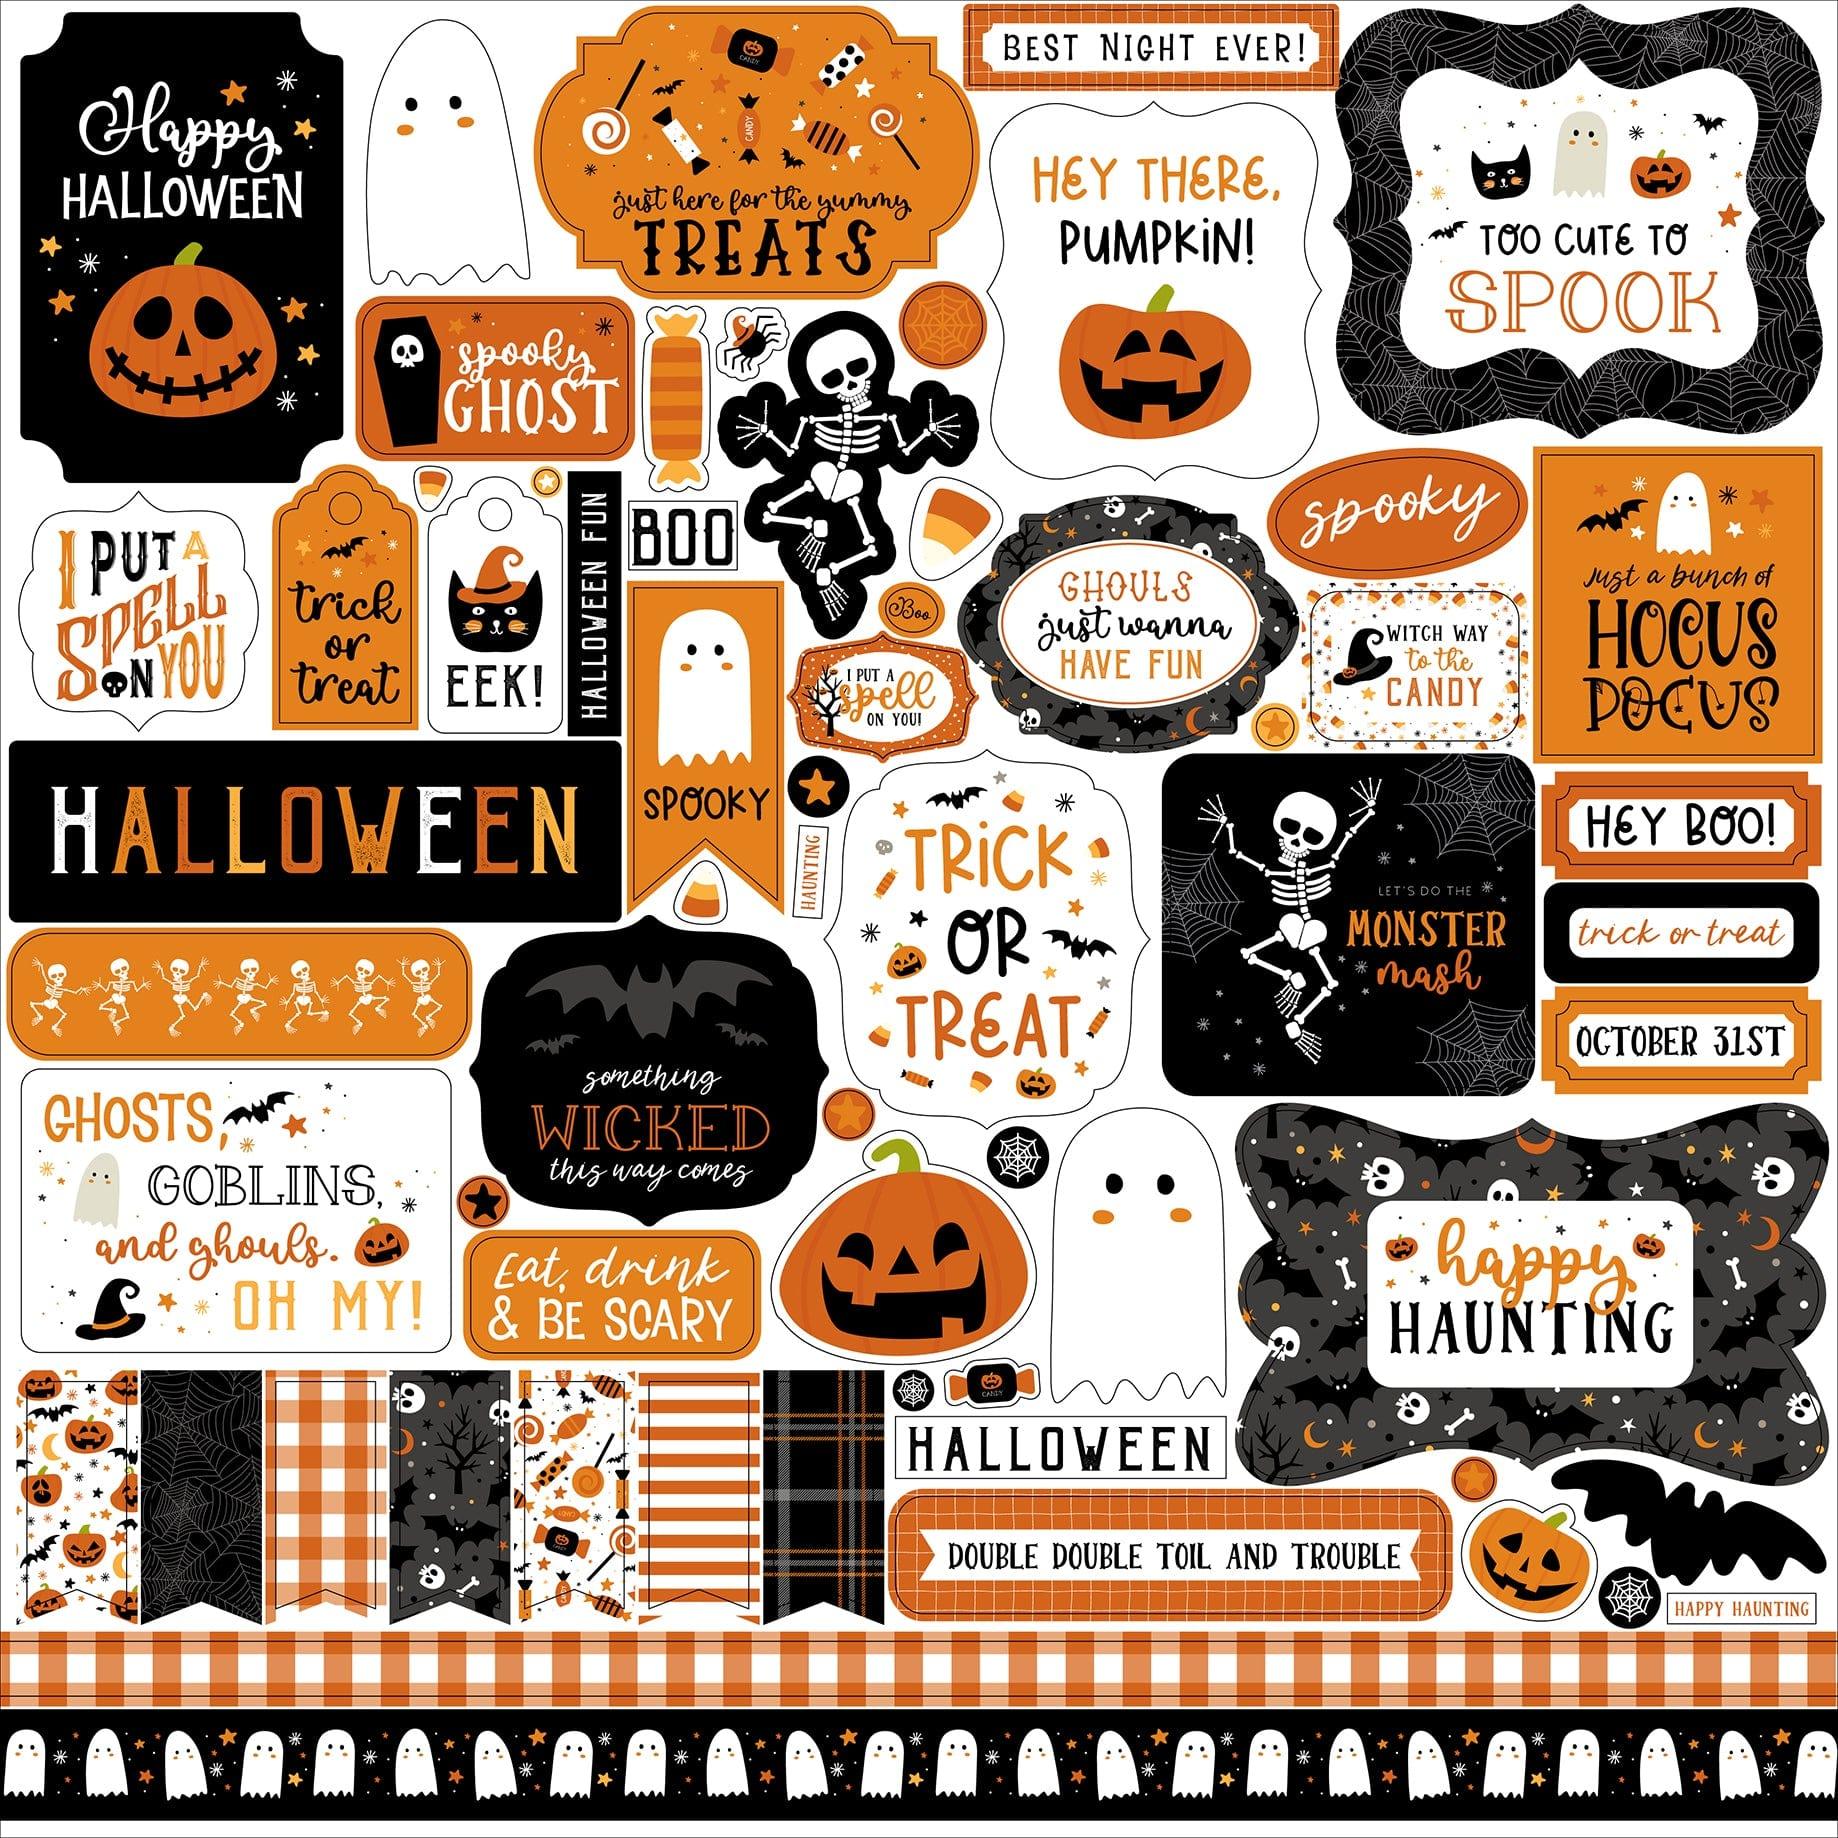 Halloween Party Collection 12 x 12 Scrapbook Sticker Sheet by Echo Park Paper - Scrapbook Supply Companies